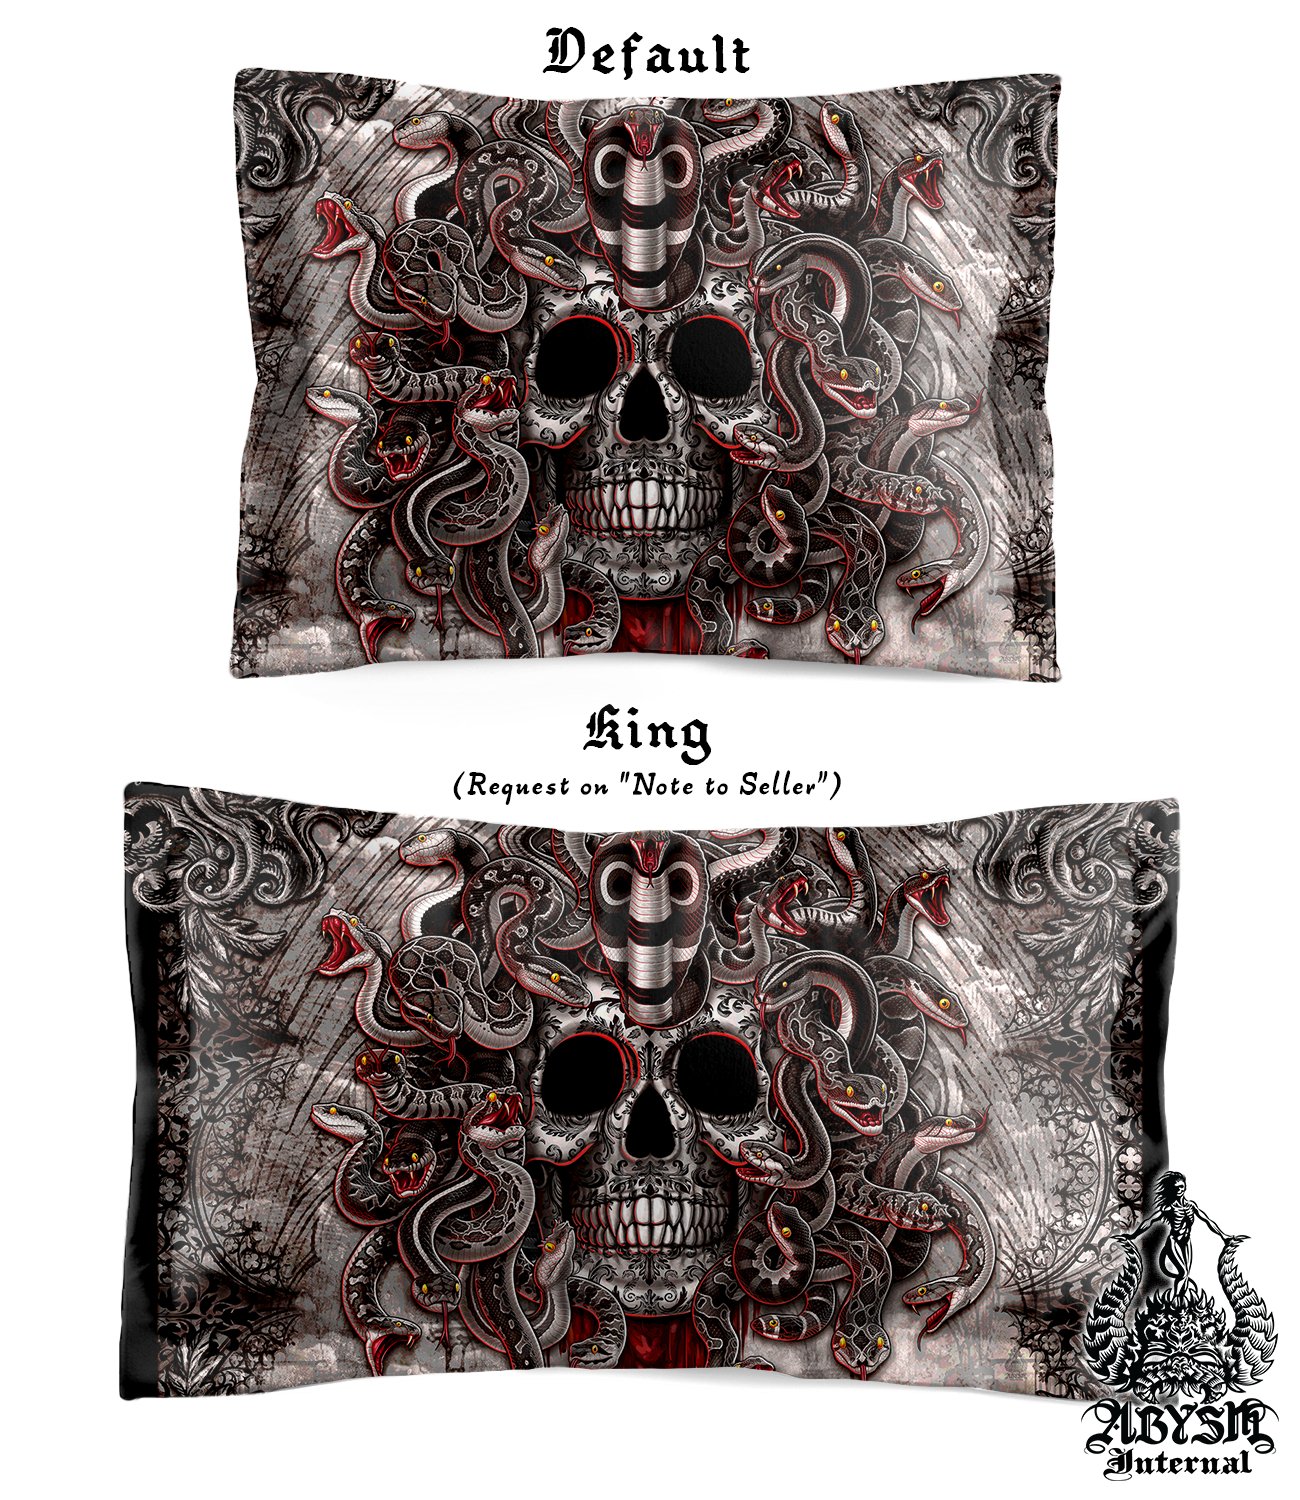 Gothic Bed Cover, Duvet or Comforter, Horror Medusa, Goth Bedding Set, Skull Bedroom Decor, King, Queen & Twin Size - 4 Faces, Grey - Abysm Internal